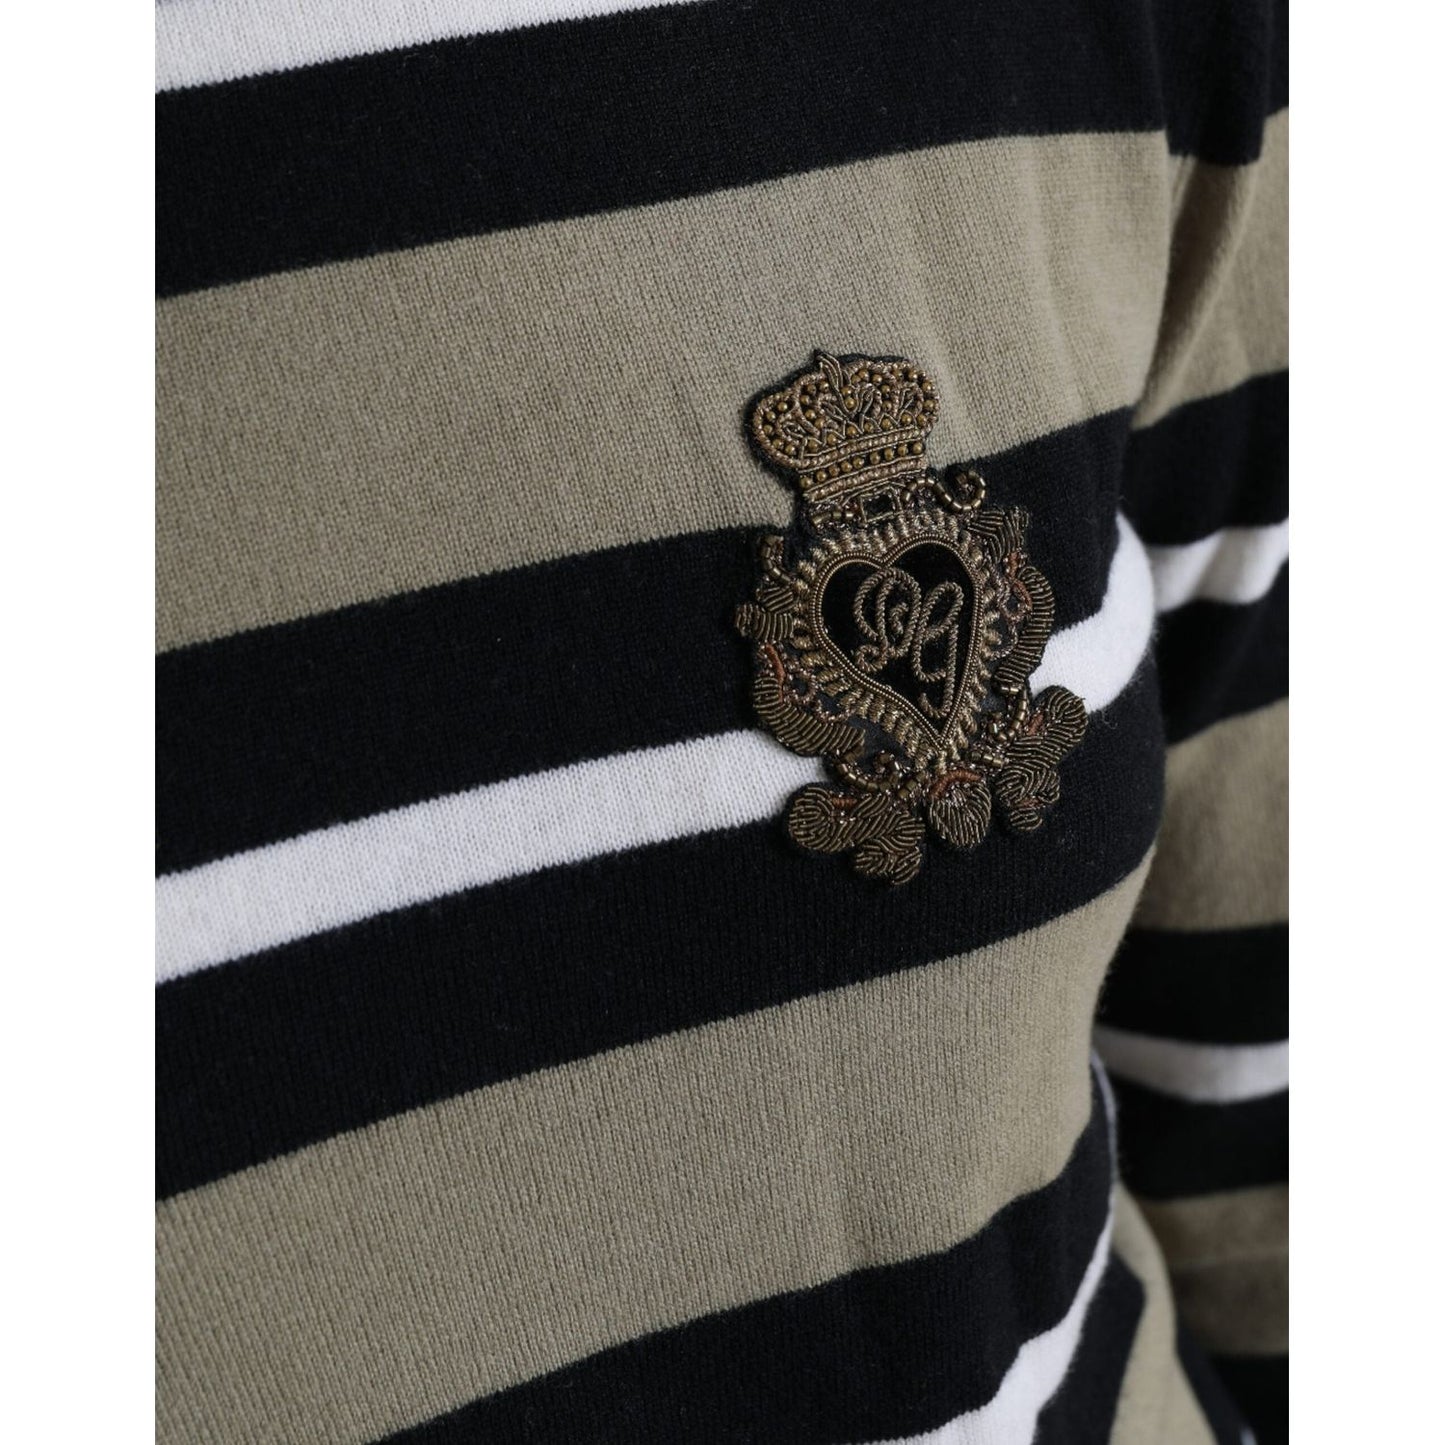 Dolce & GabbanaMulticolor Striped Wool Turtleneck SweaterMcRichard Designer Brands£519.00